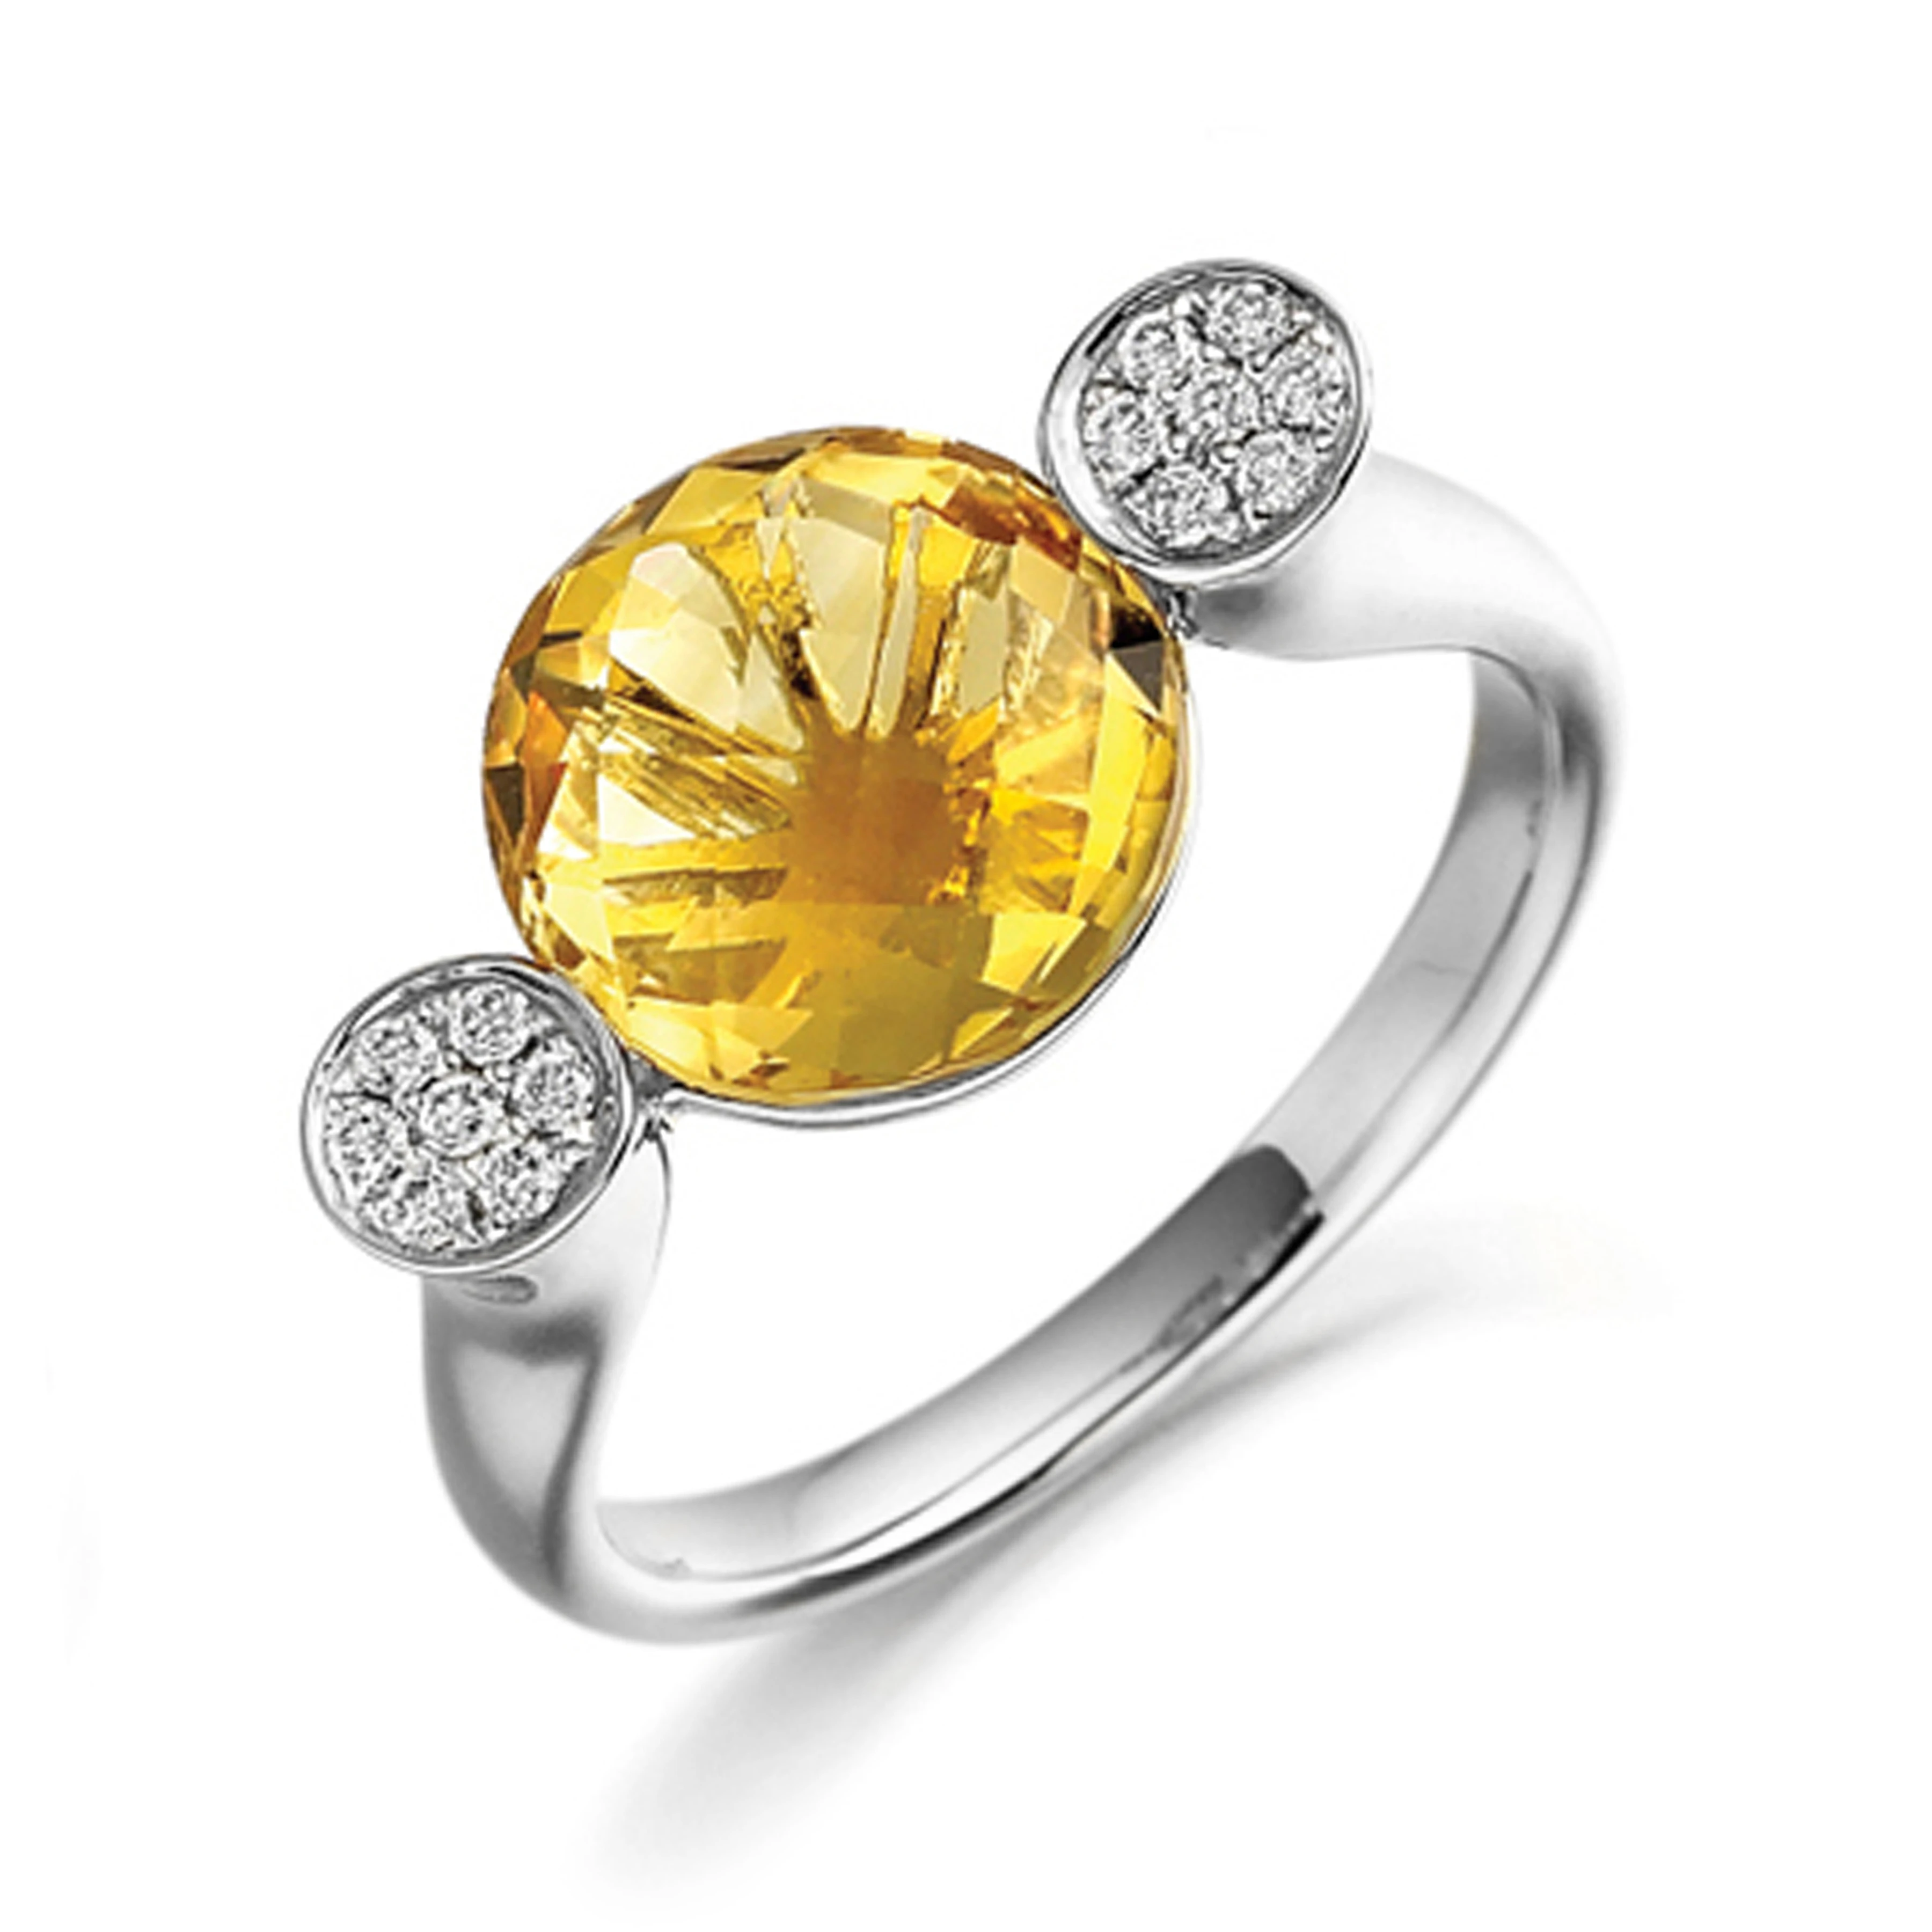 10mm Round Citrine Stones Side Stone Diamond And Gemstone Engagement Ring